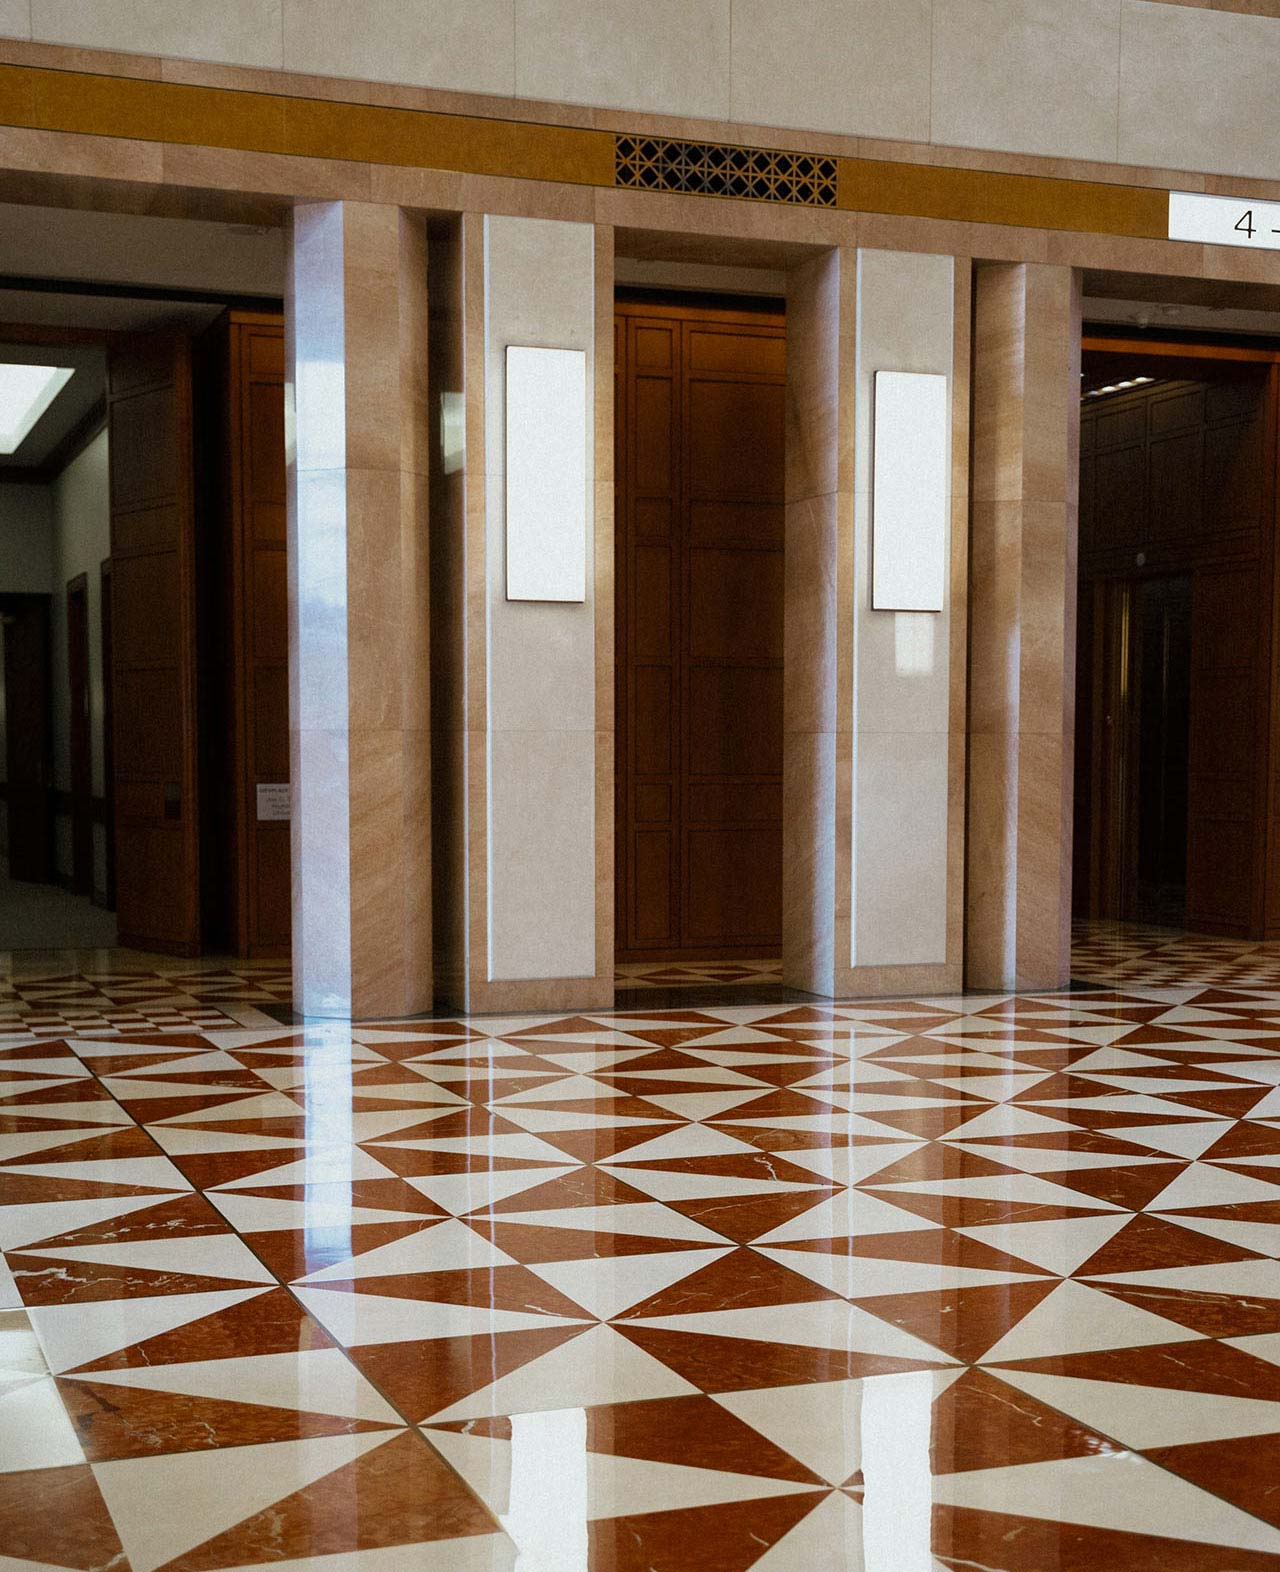 Podlaha s geometrickými tvarmi